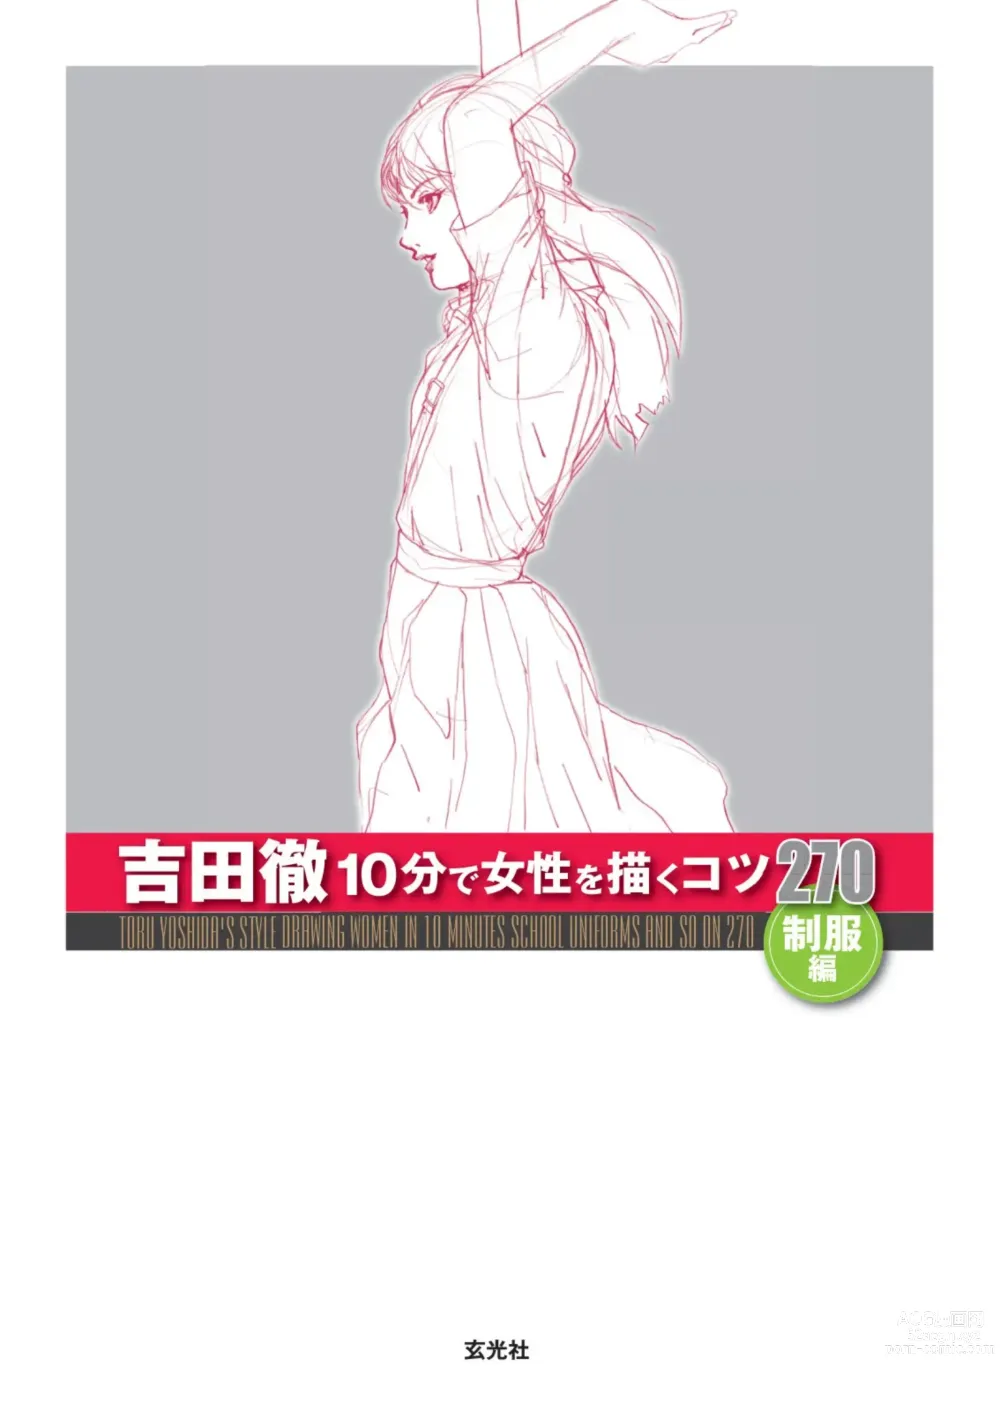 Page 3 of manga Toru Yoshida Tips for drawing women in 10 minutes 270 Uniforms